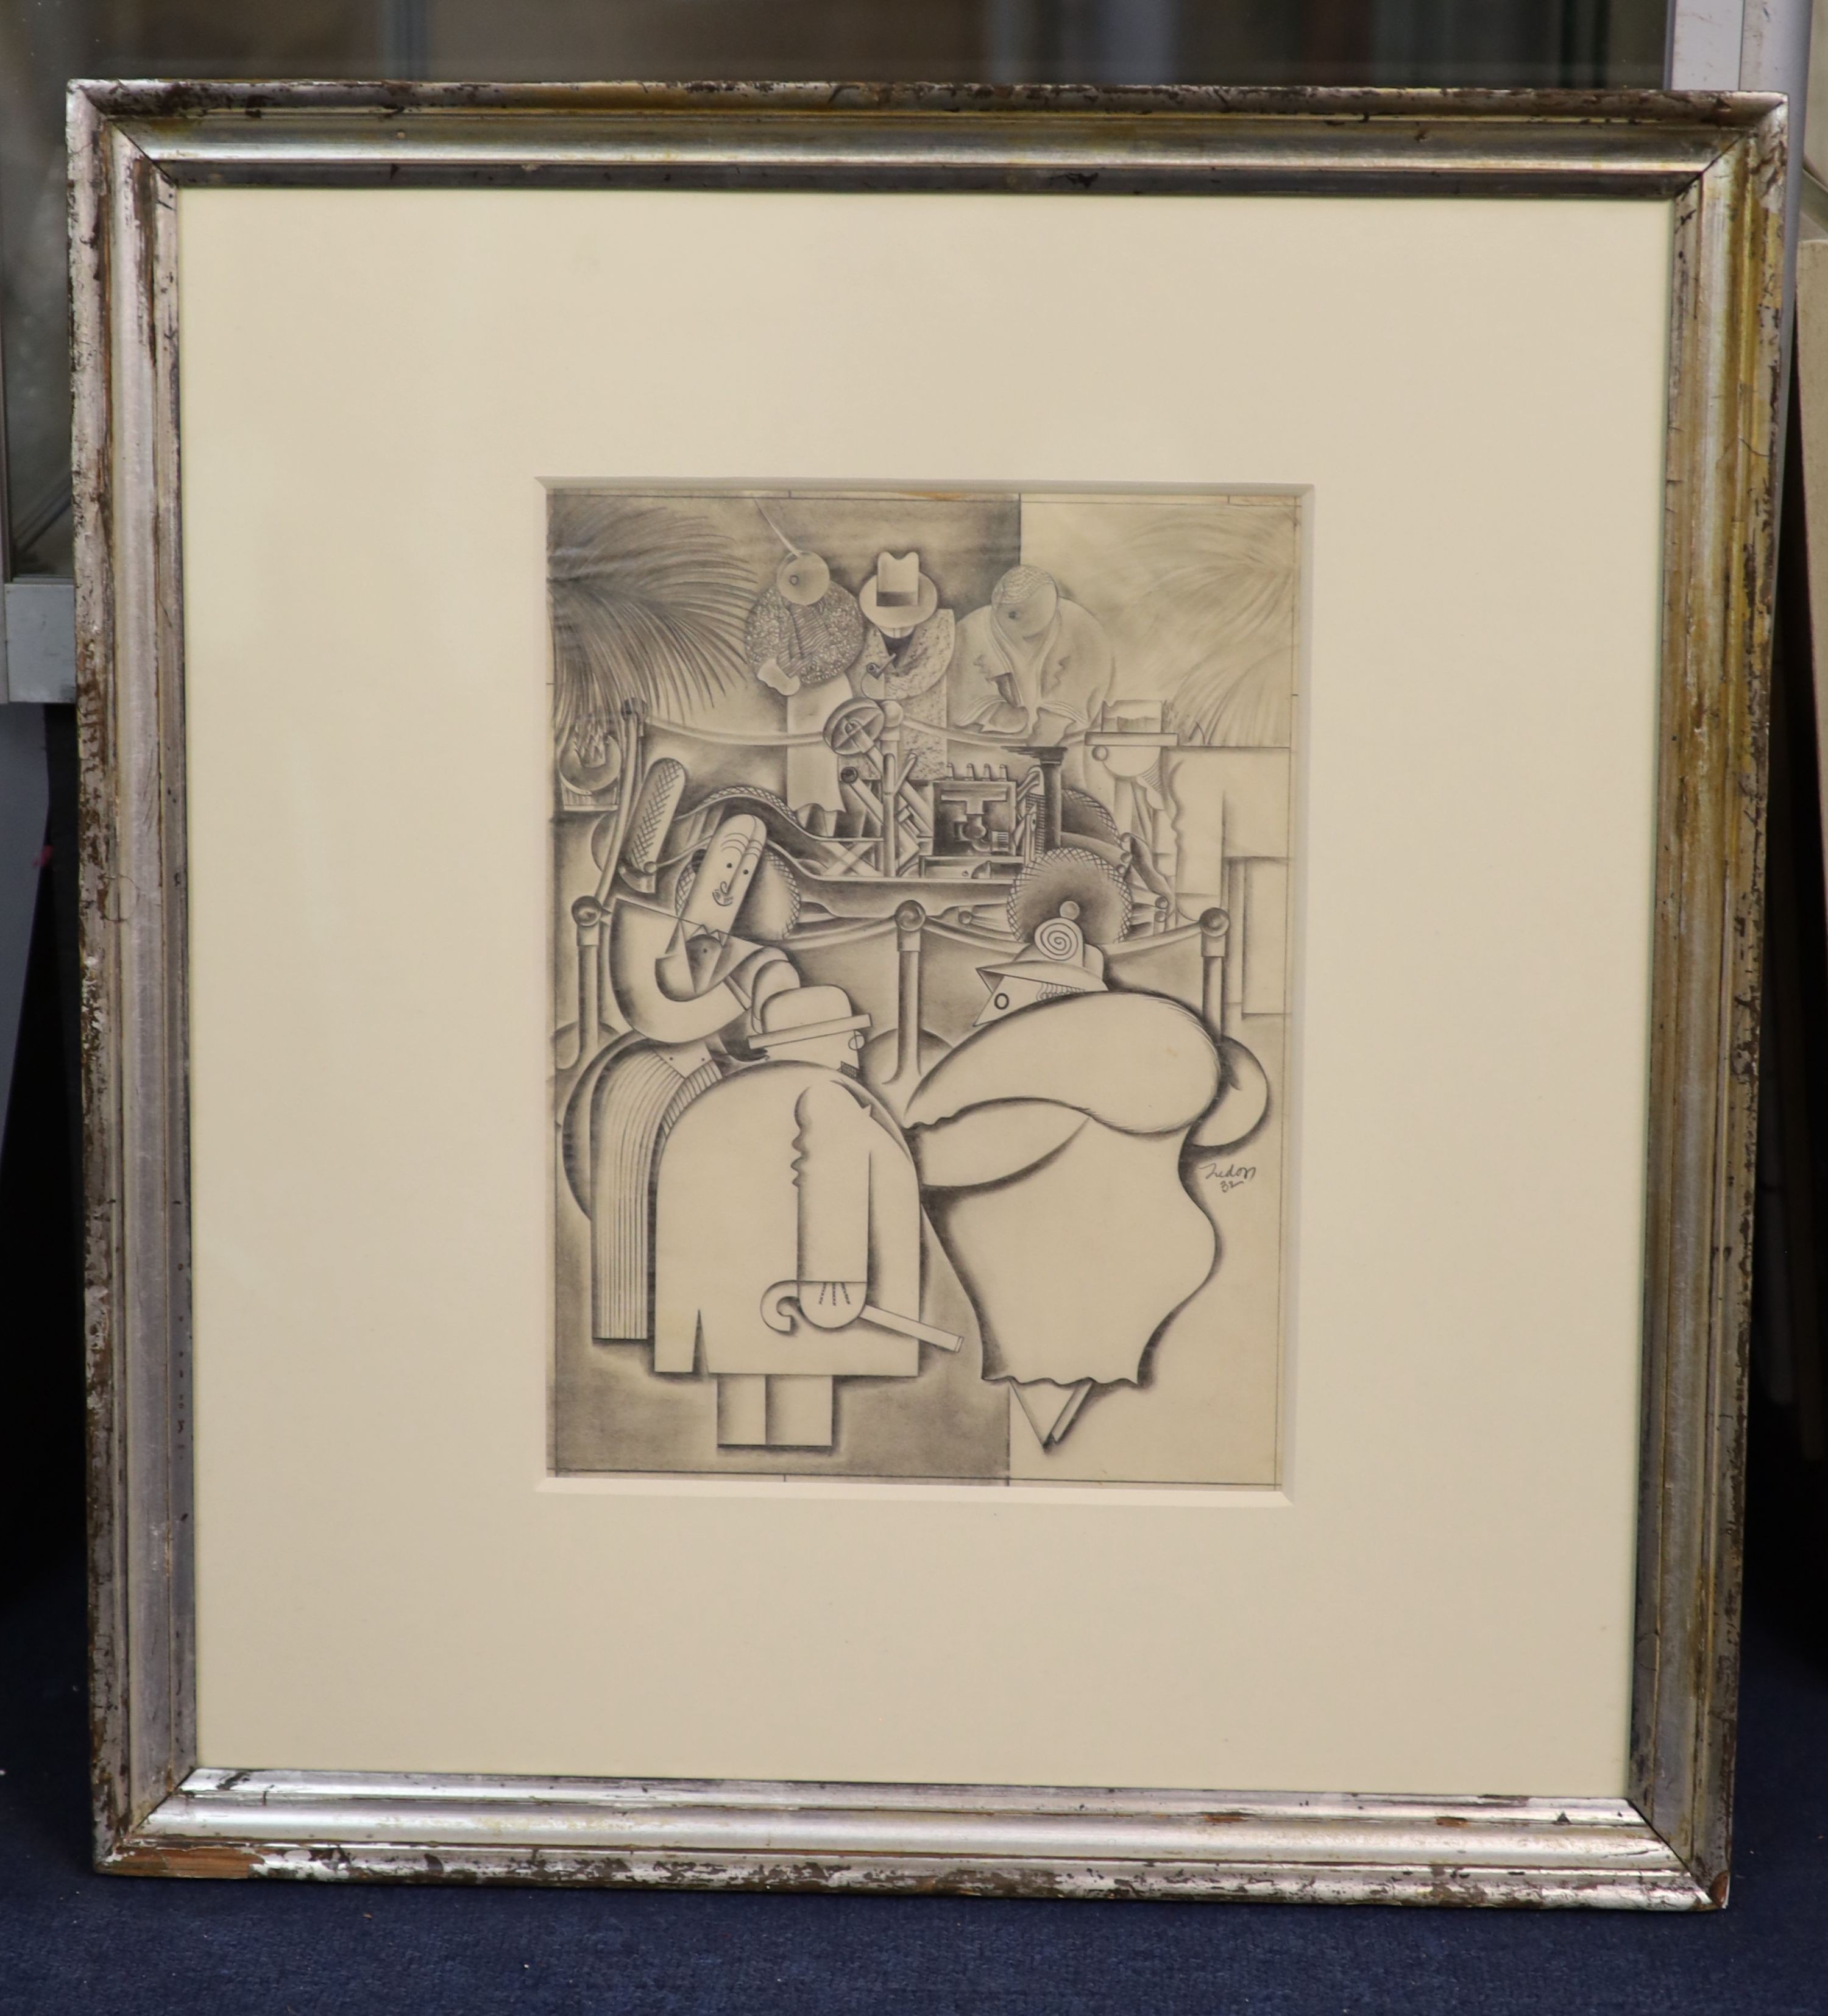 Charles Tudor (American, 1903-1970), Figures around a bar, pencil on paper, 32 x 23.5cm